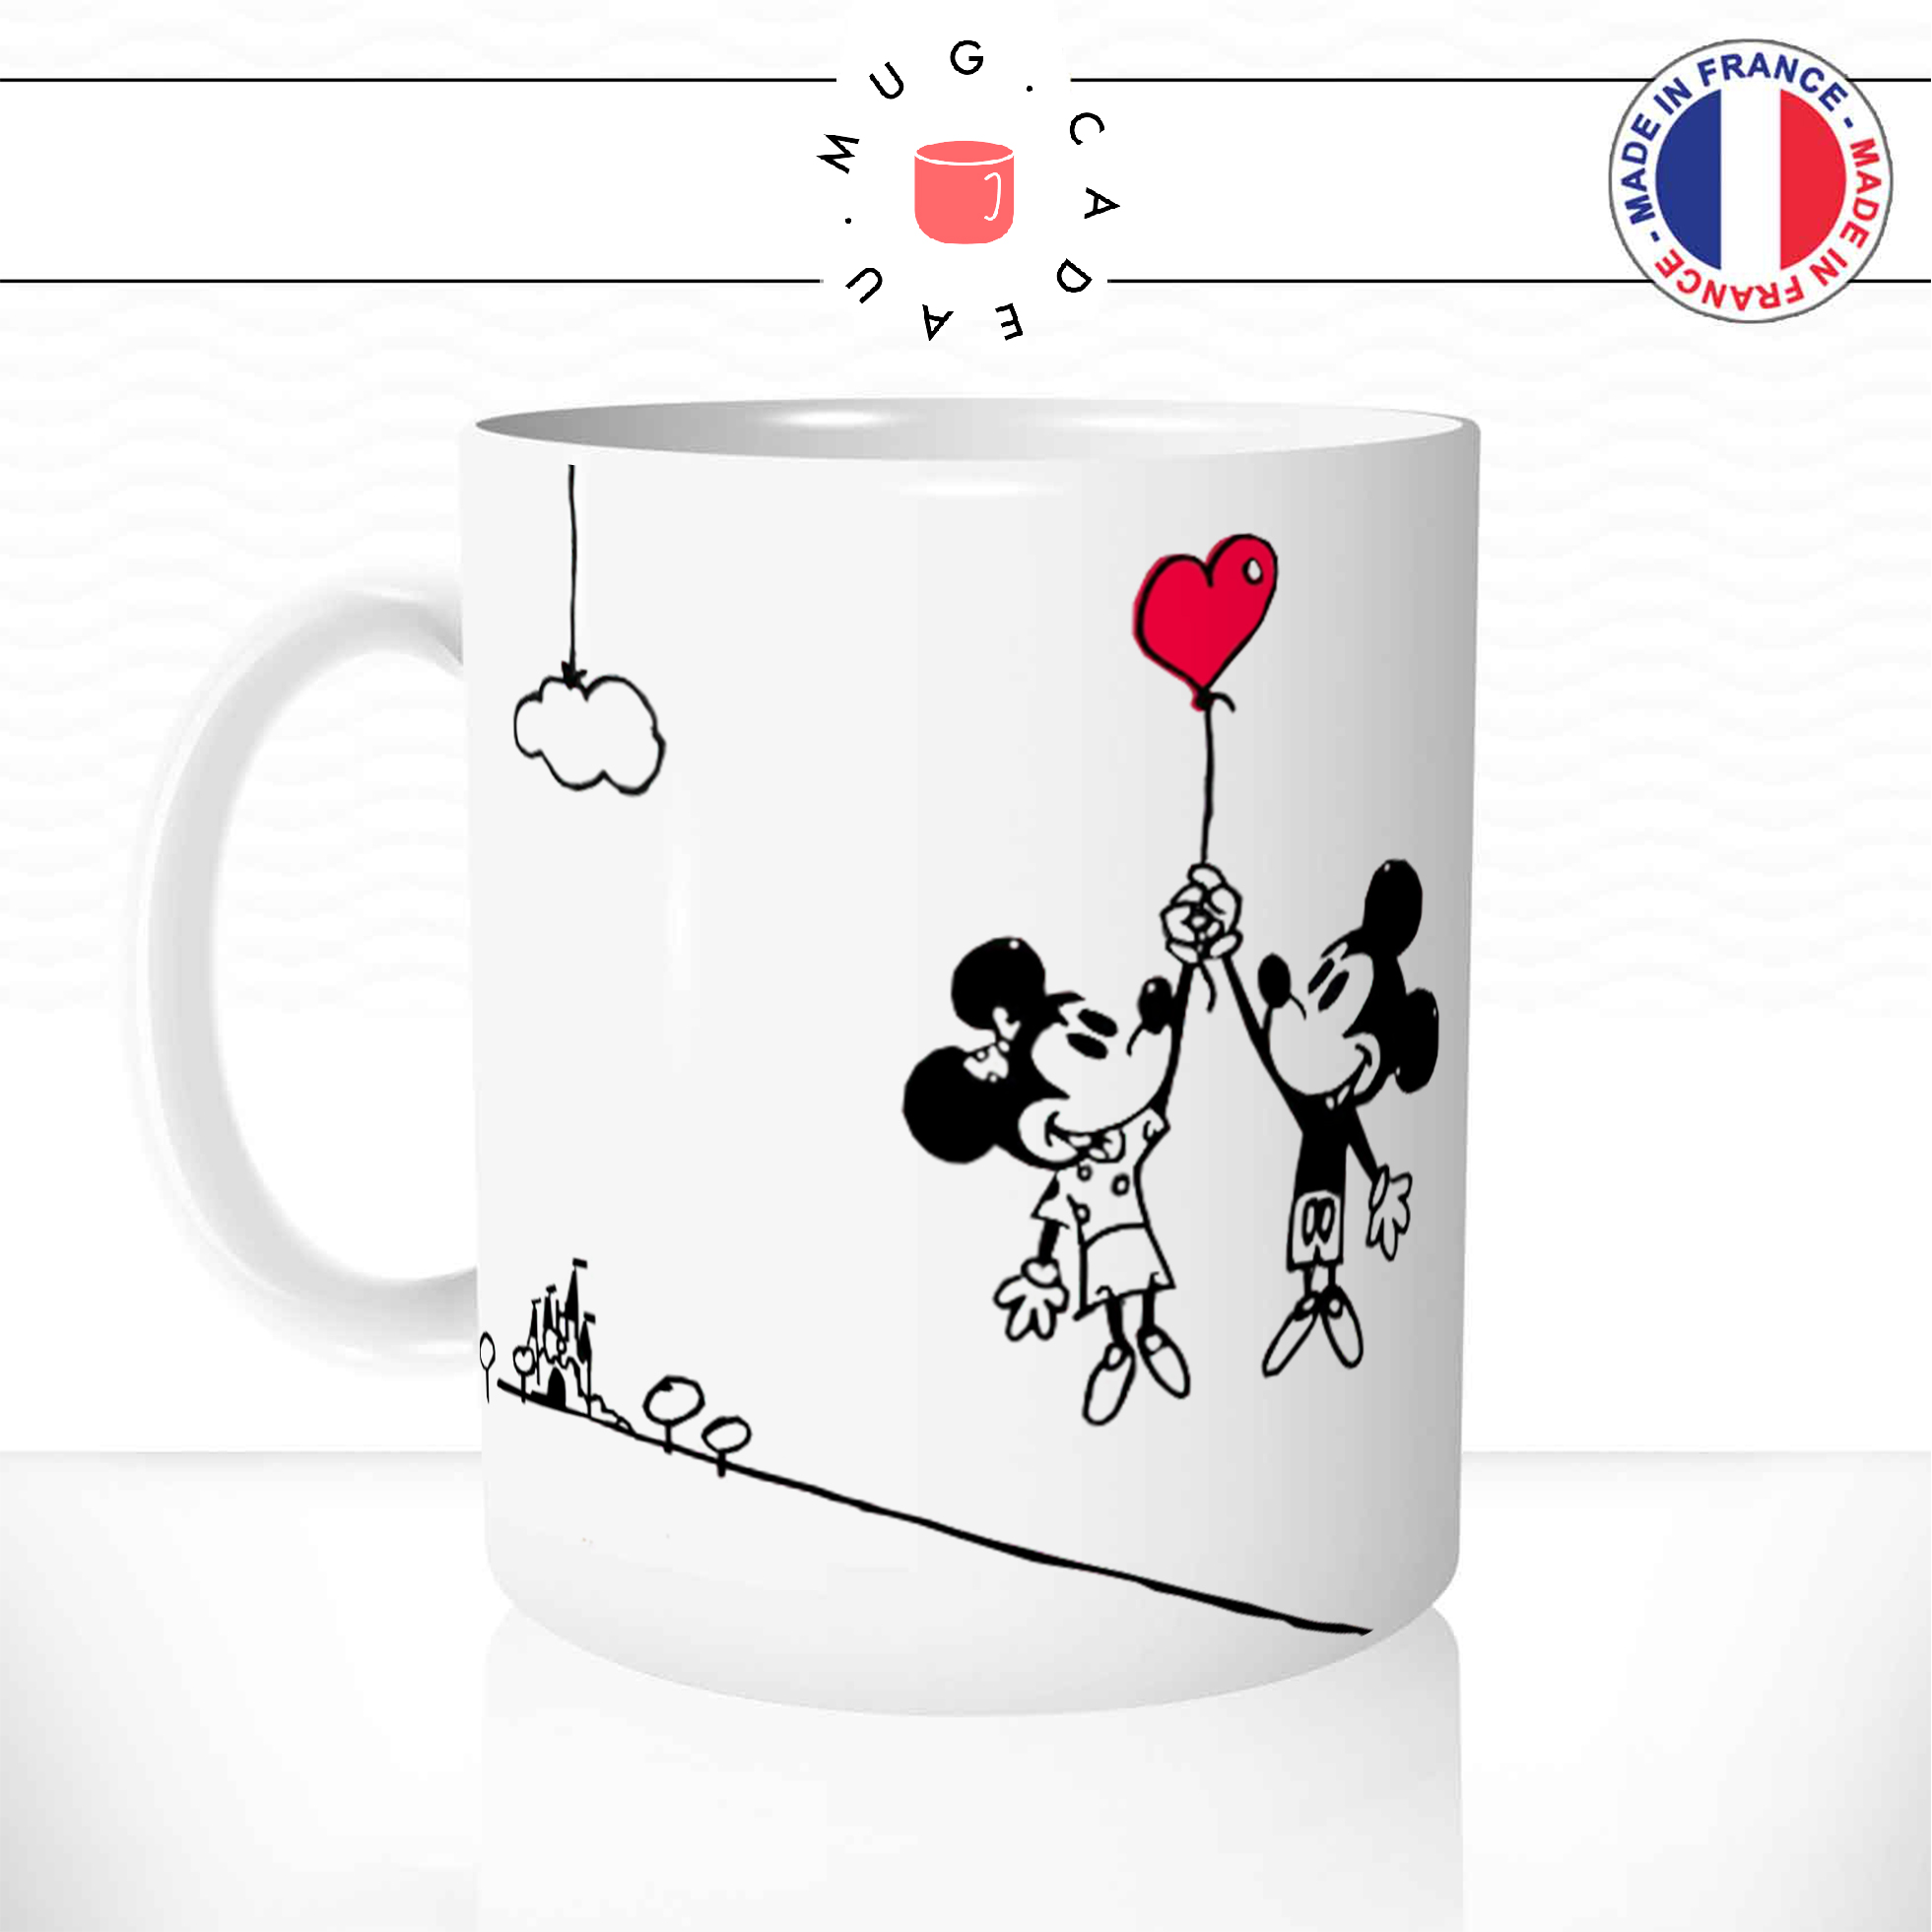 mug-tasse-ref33-dessin-anime-minie-mickey-coeur-chateau-cafe-the-mugs-tasses-personnalise-anse-gauche